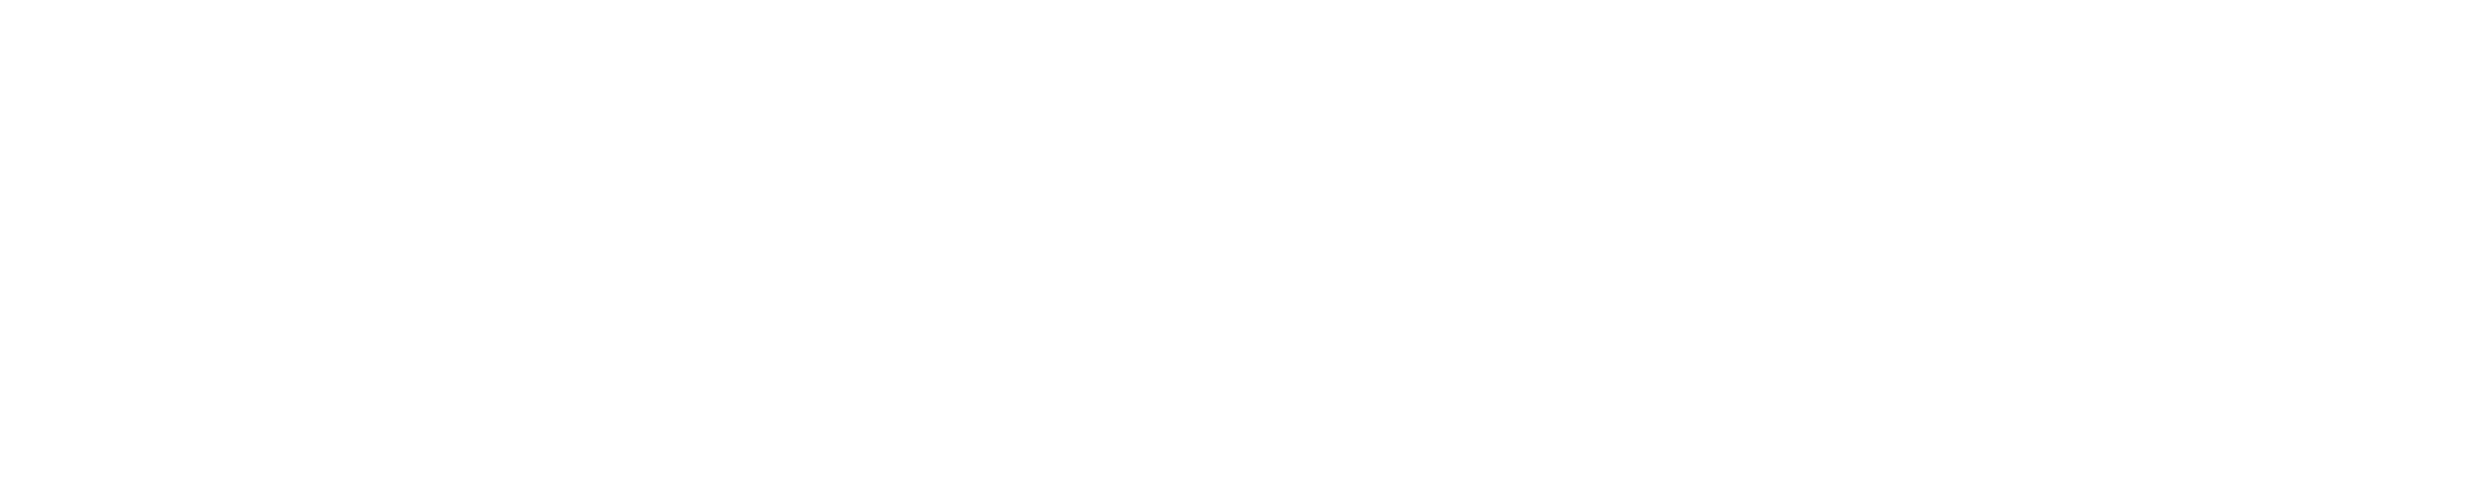 White Amana Logo - Amana Contracting & Steel Buildings - Industrial Contractor